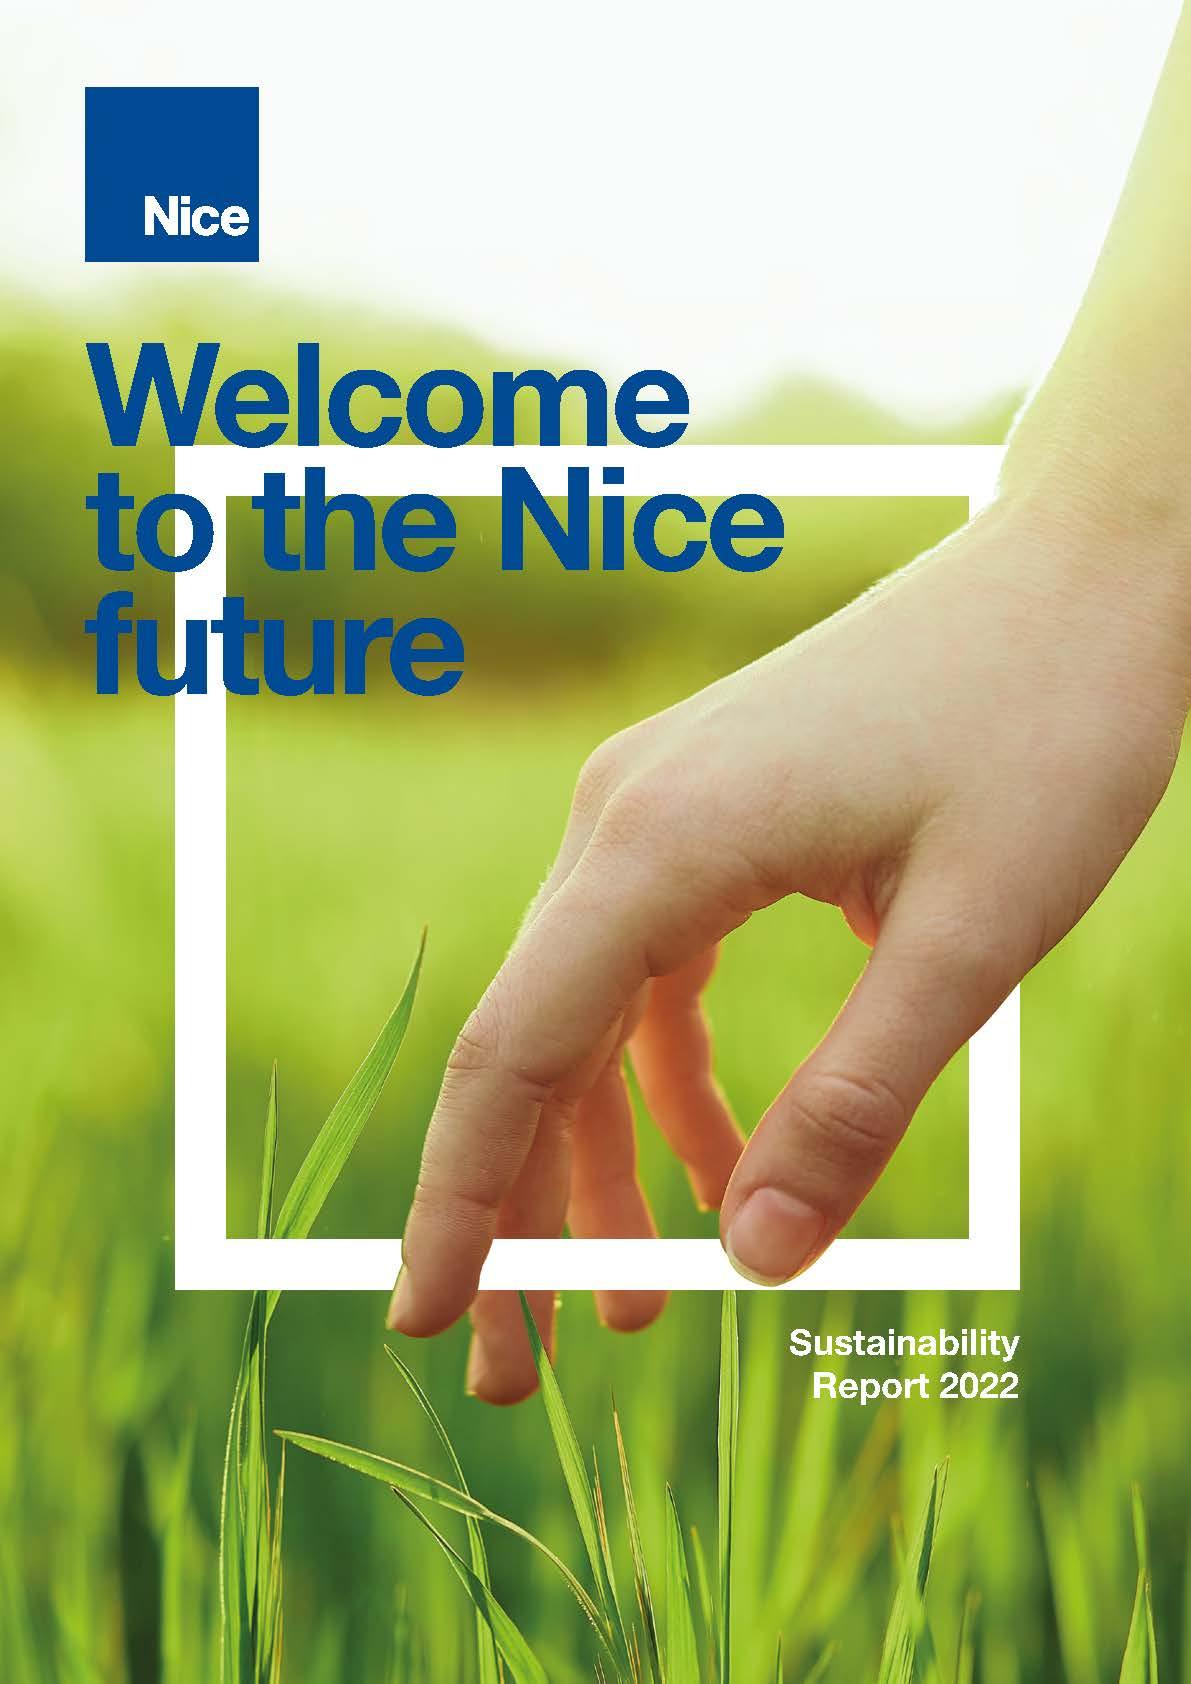 Nice Sustainability Report 2022 